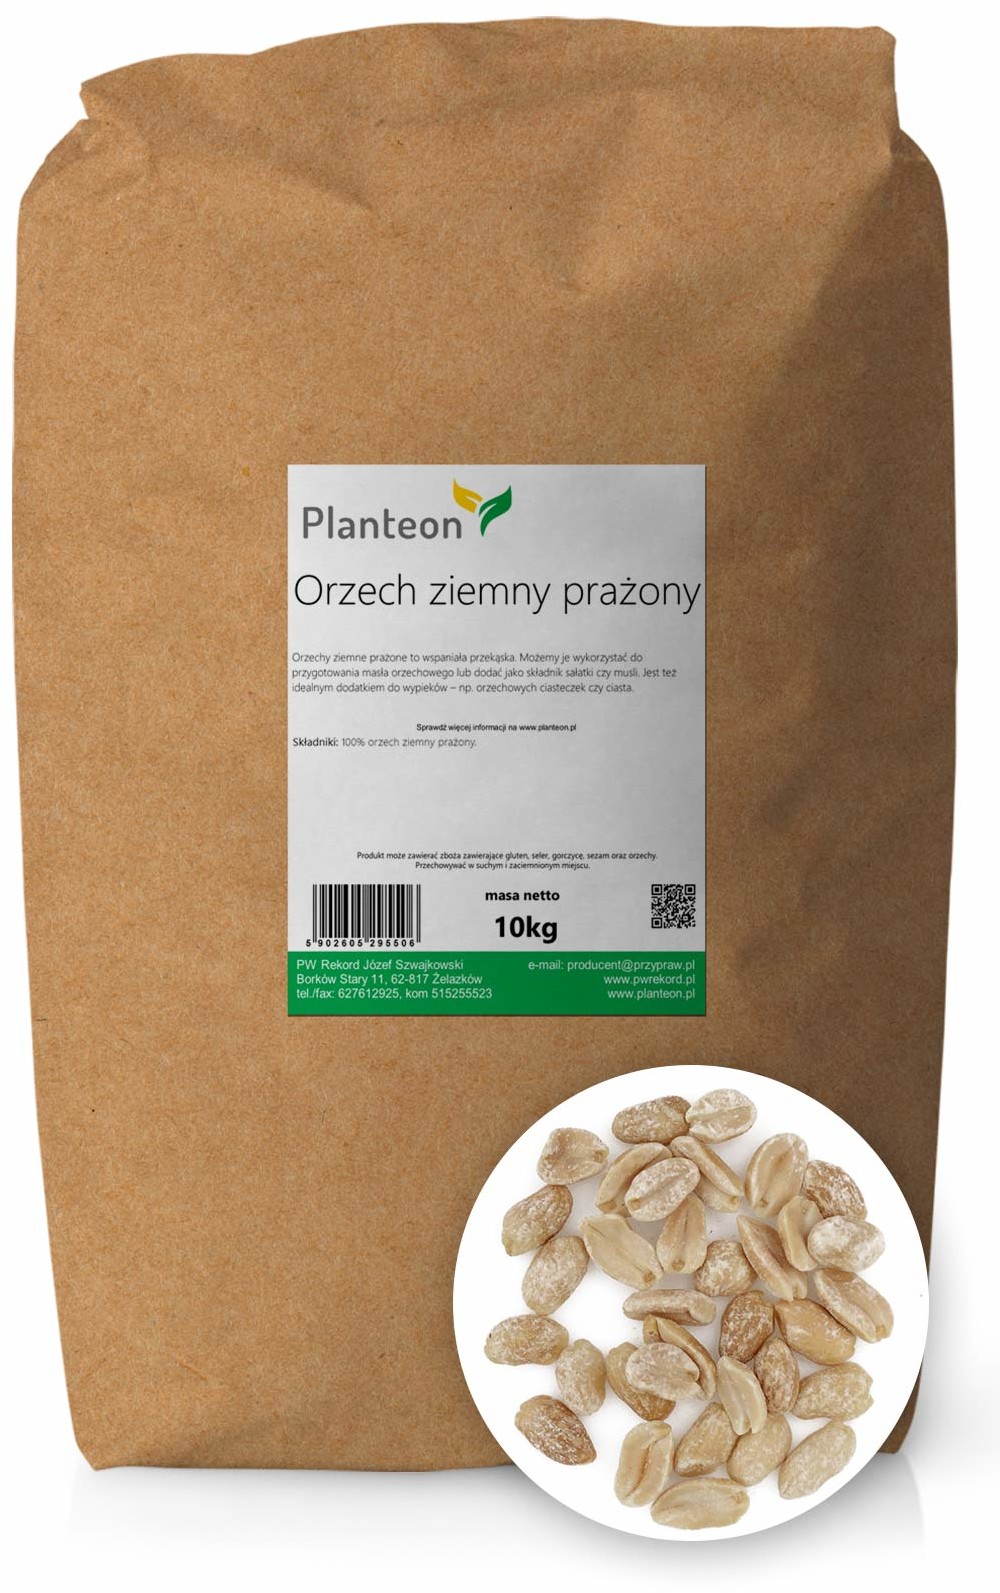 Planteon Orzechy ziemne prażone 10kg 2-0643-01-7